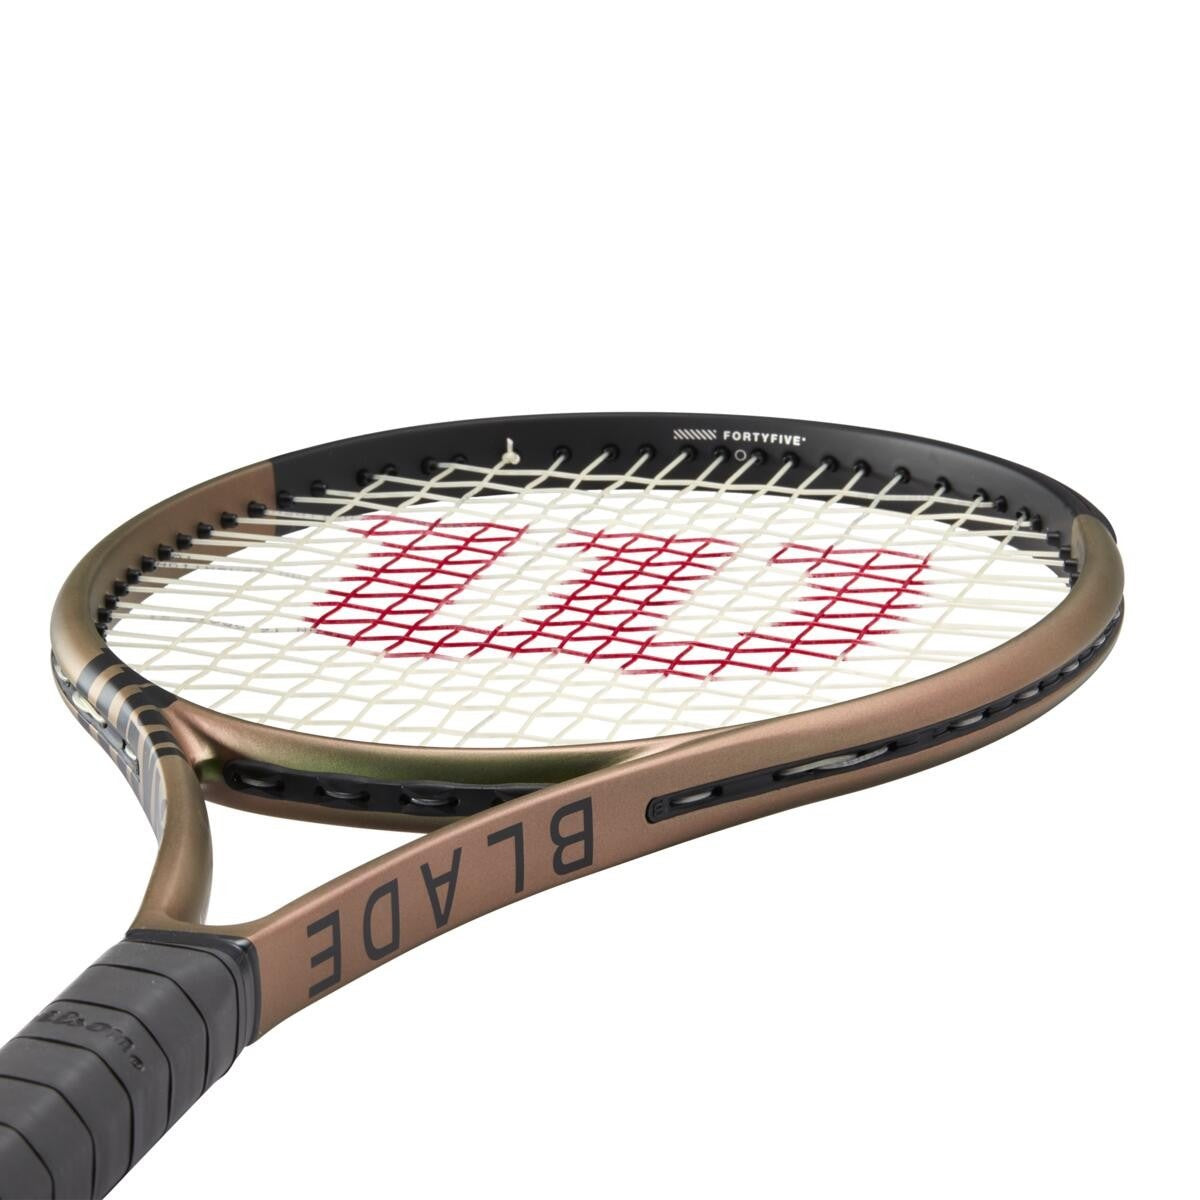 Wilson Blade 100 V8.0 Tennis Racket (2021 edition) - 300 Grams - Best Price online Prokicksports.com